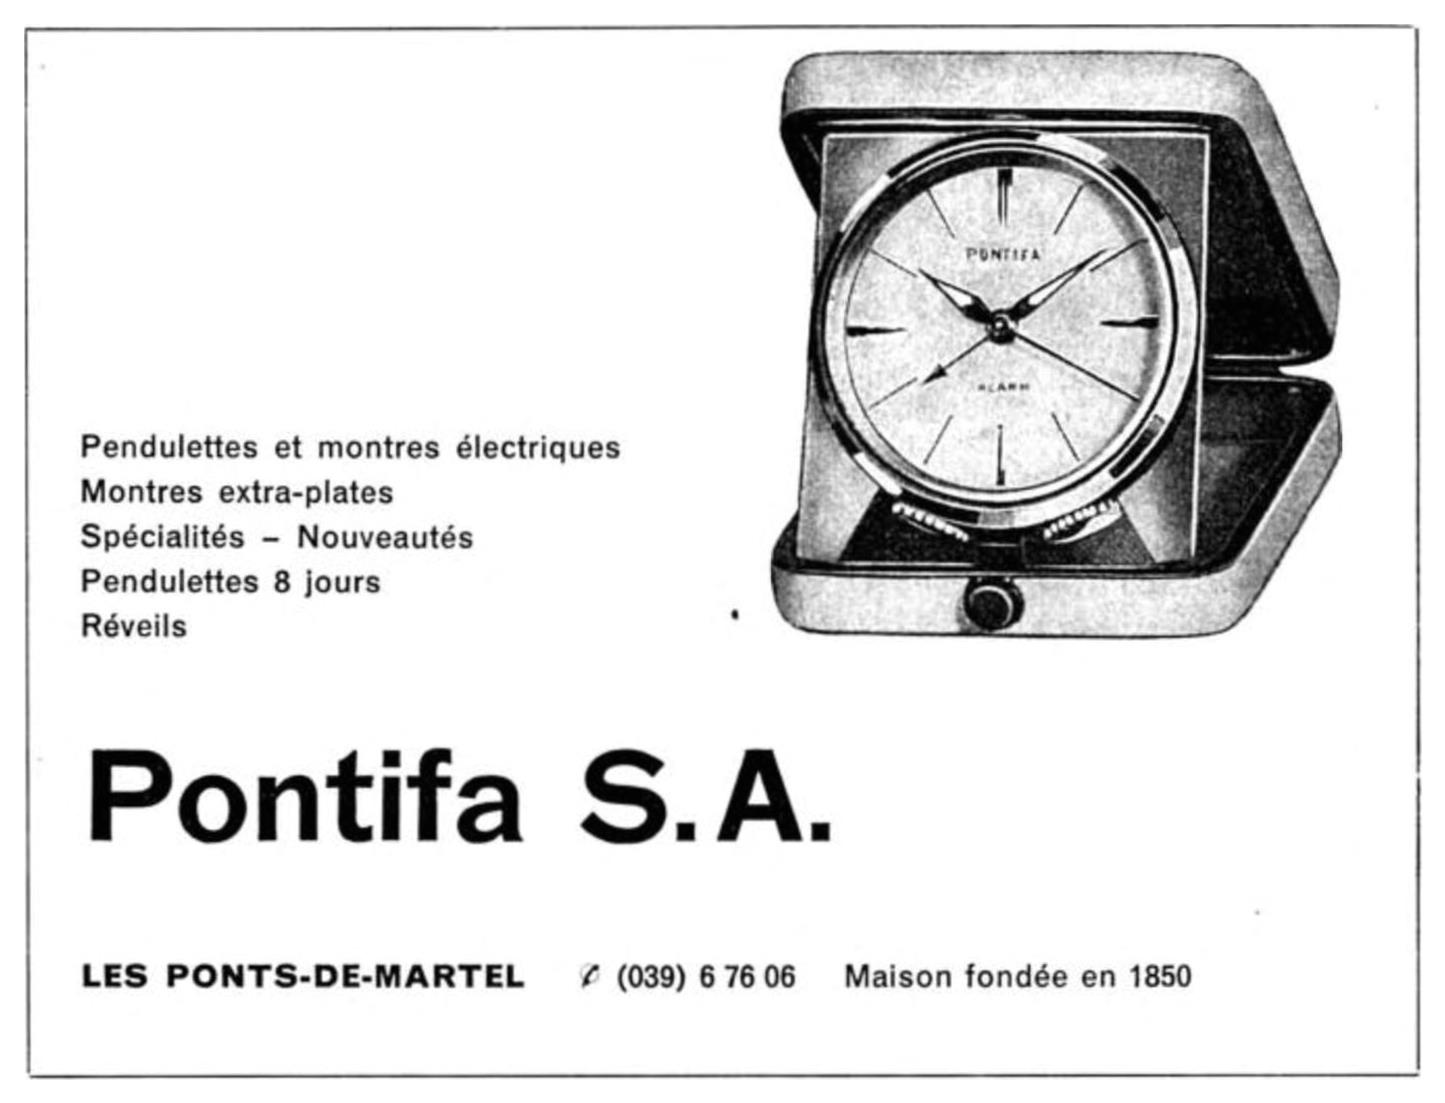 Pontifa 1968 0.jpg